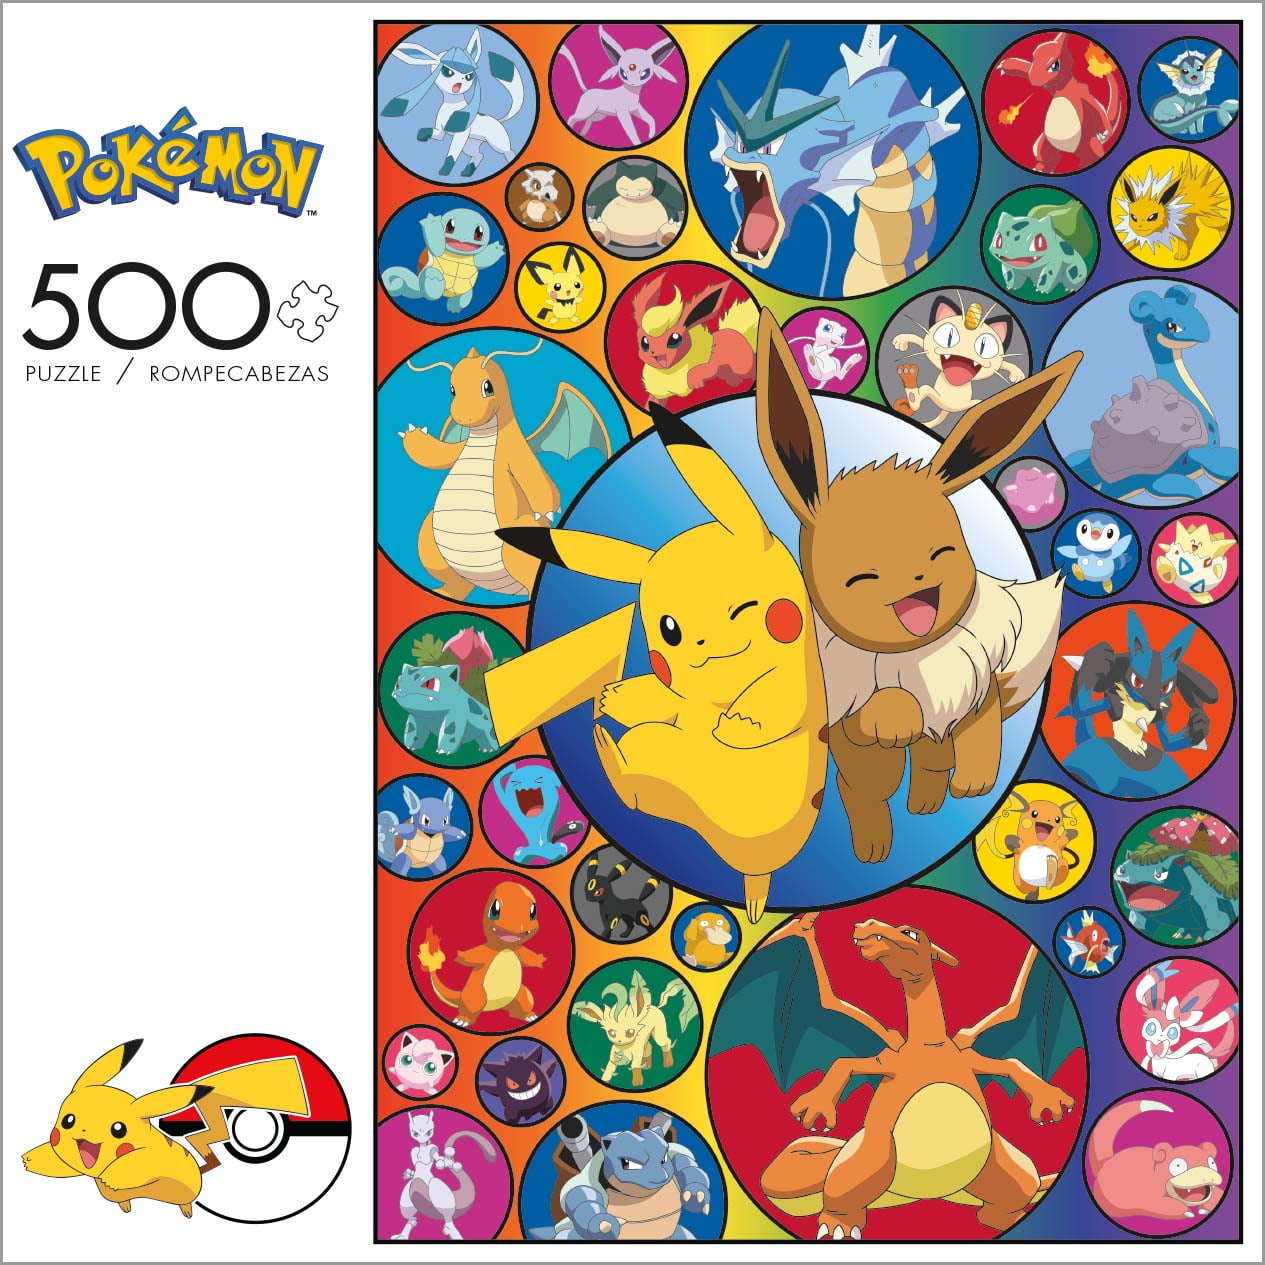 Pokémon Eevee Evolutions & Bubble. Brand New Pokemon 500 Piece Jigsaw Puzzle 